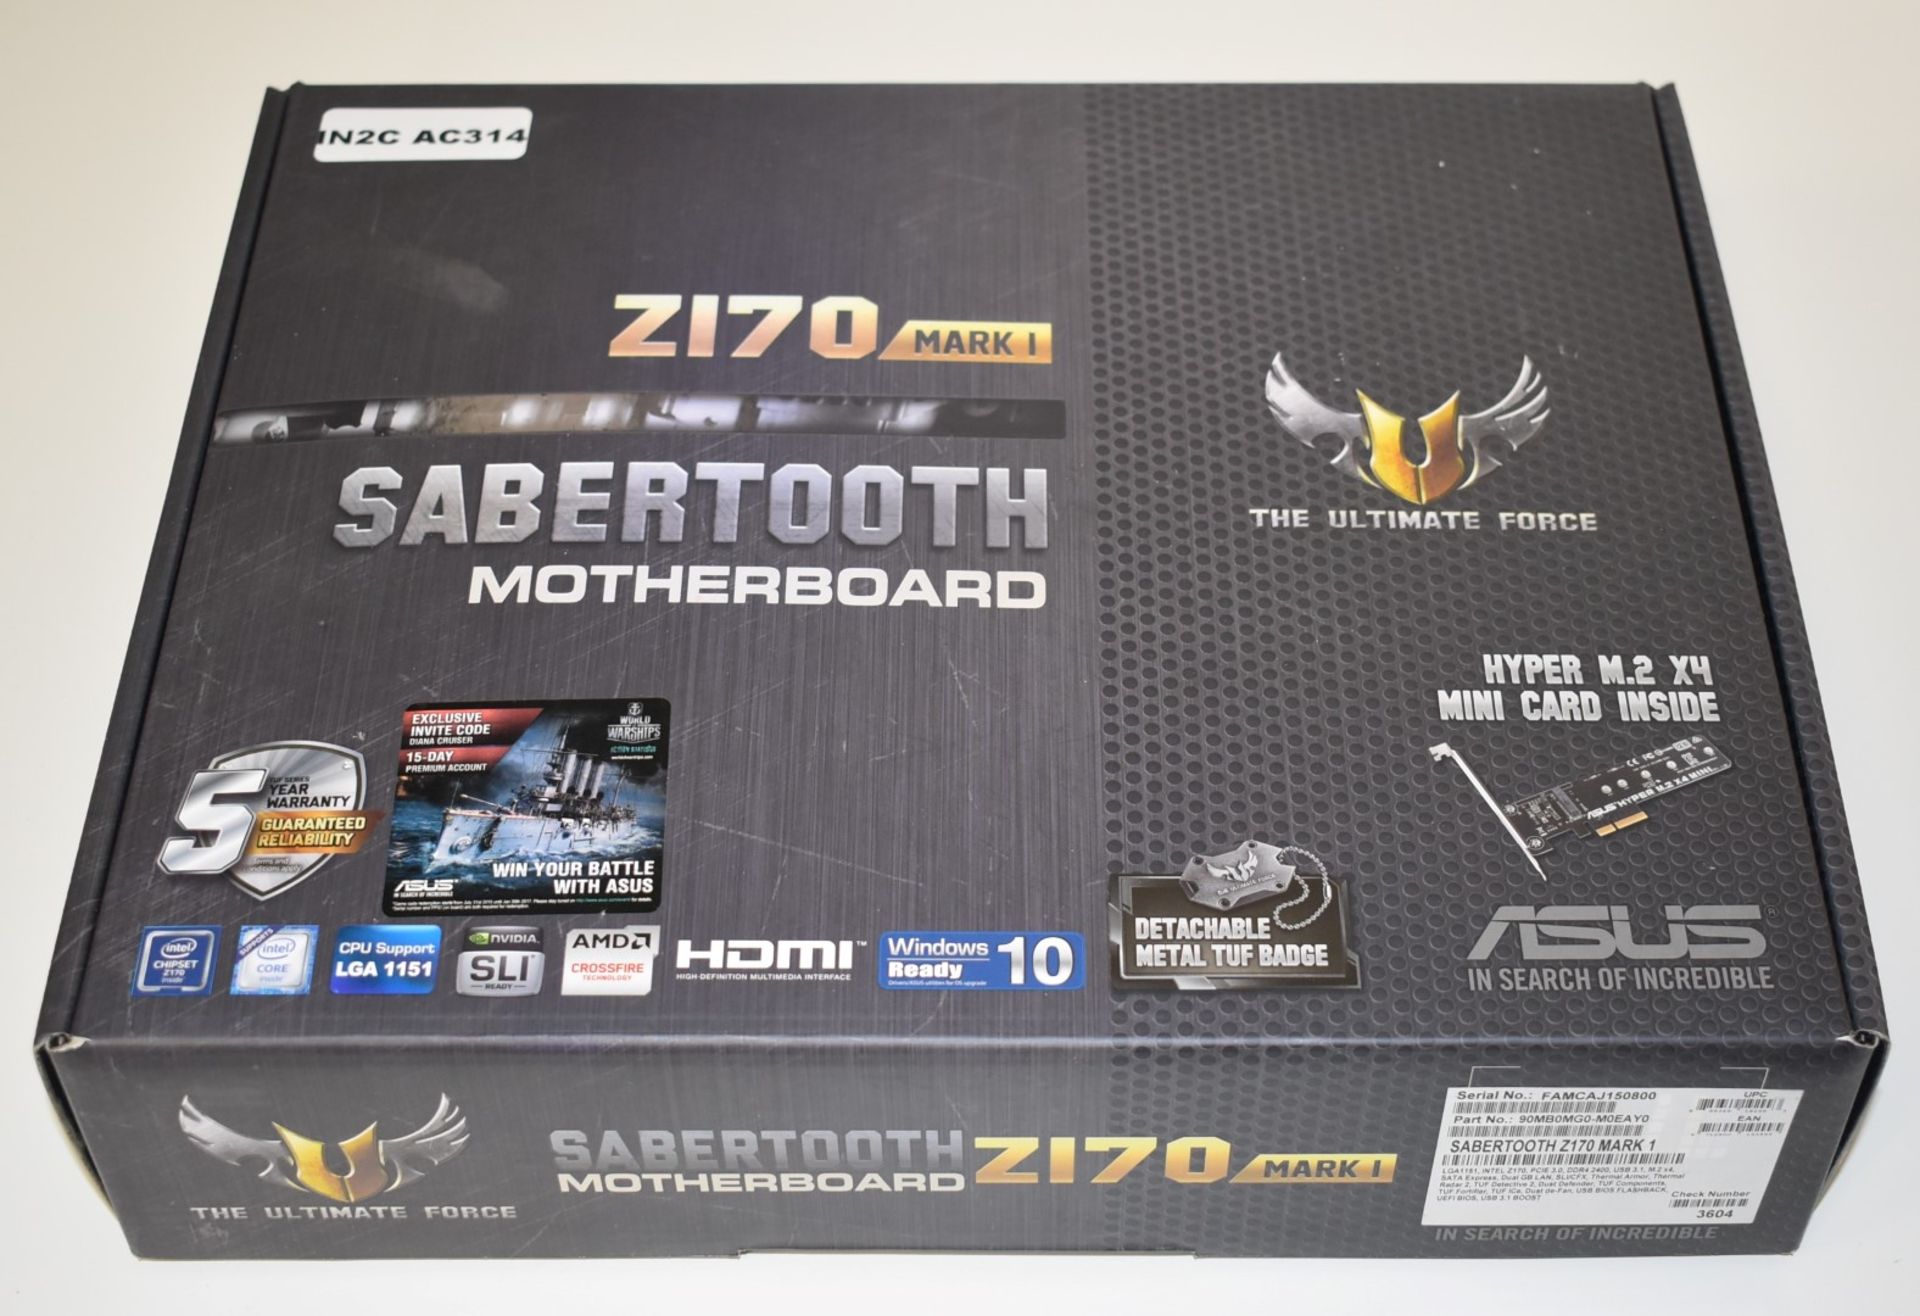 1 x Asus Sabertooth Z170 LGA1151 ATX Motherboard For Intel Processors - Unused Boxed Stock - Image 7 of 7